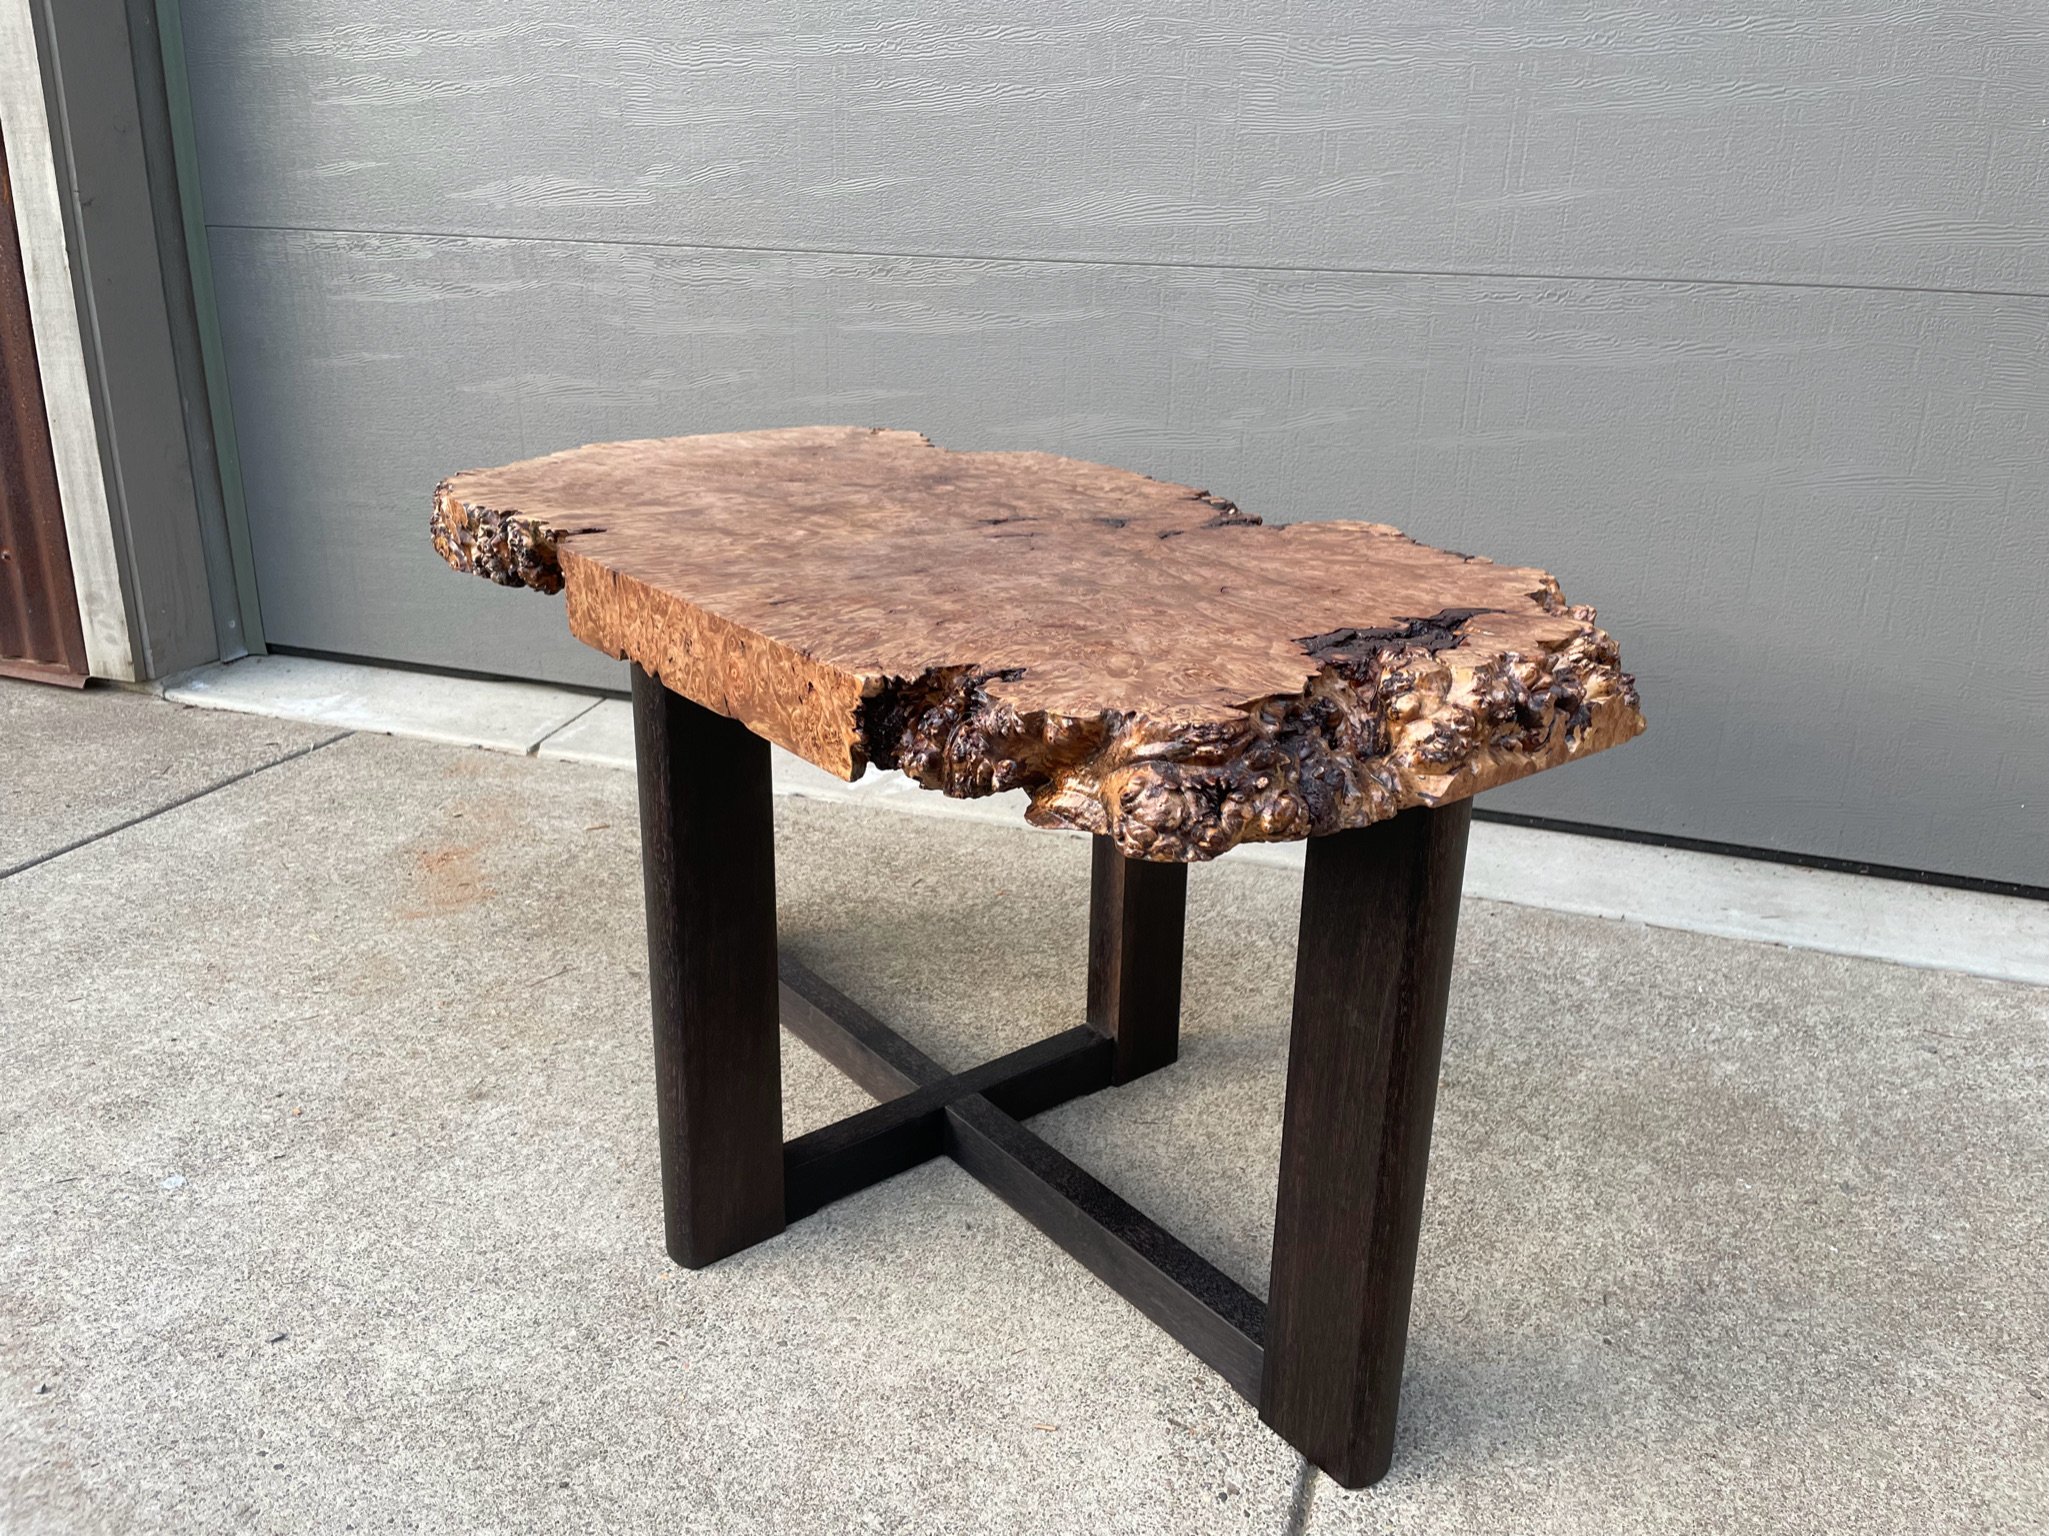 Burl Wood Table